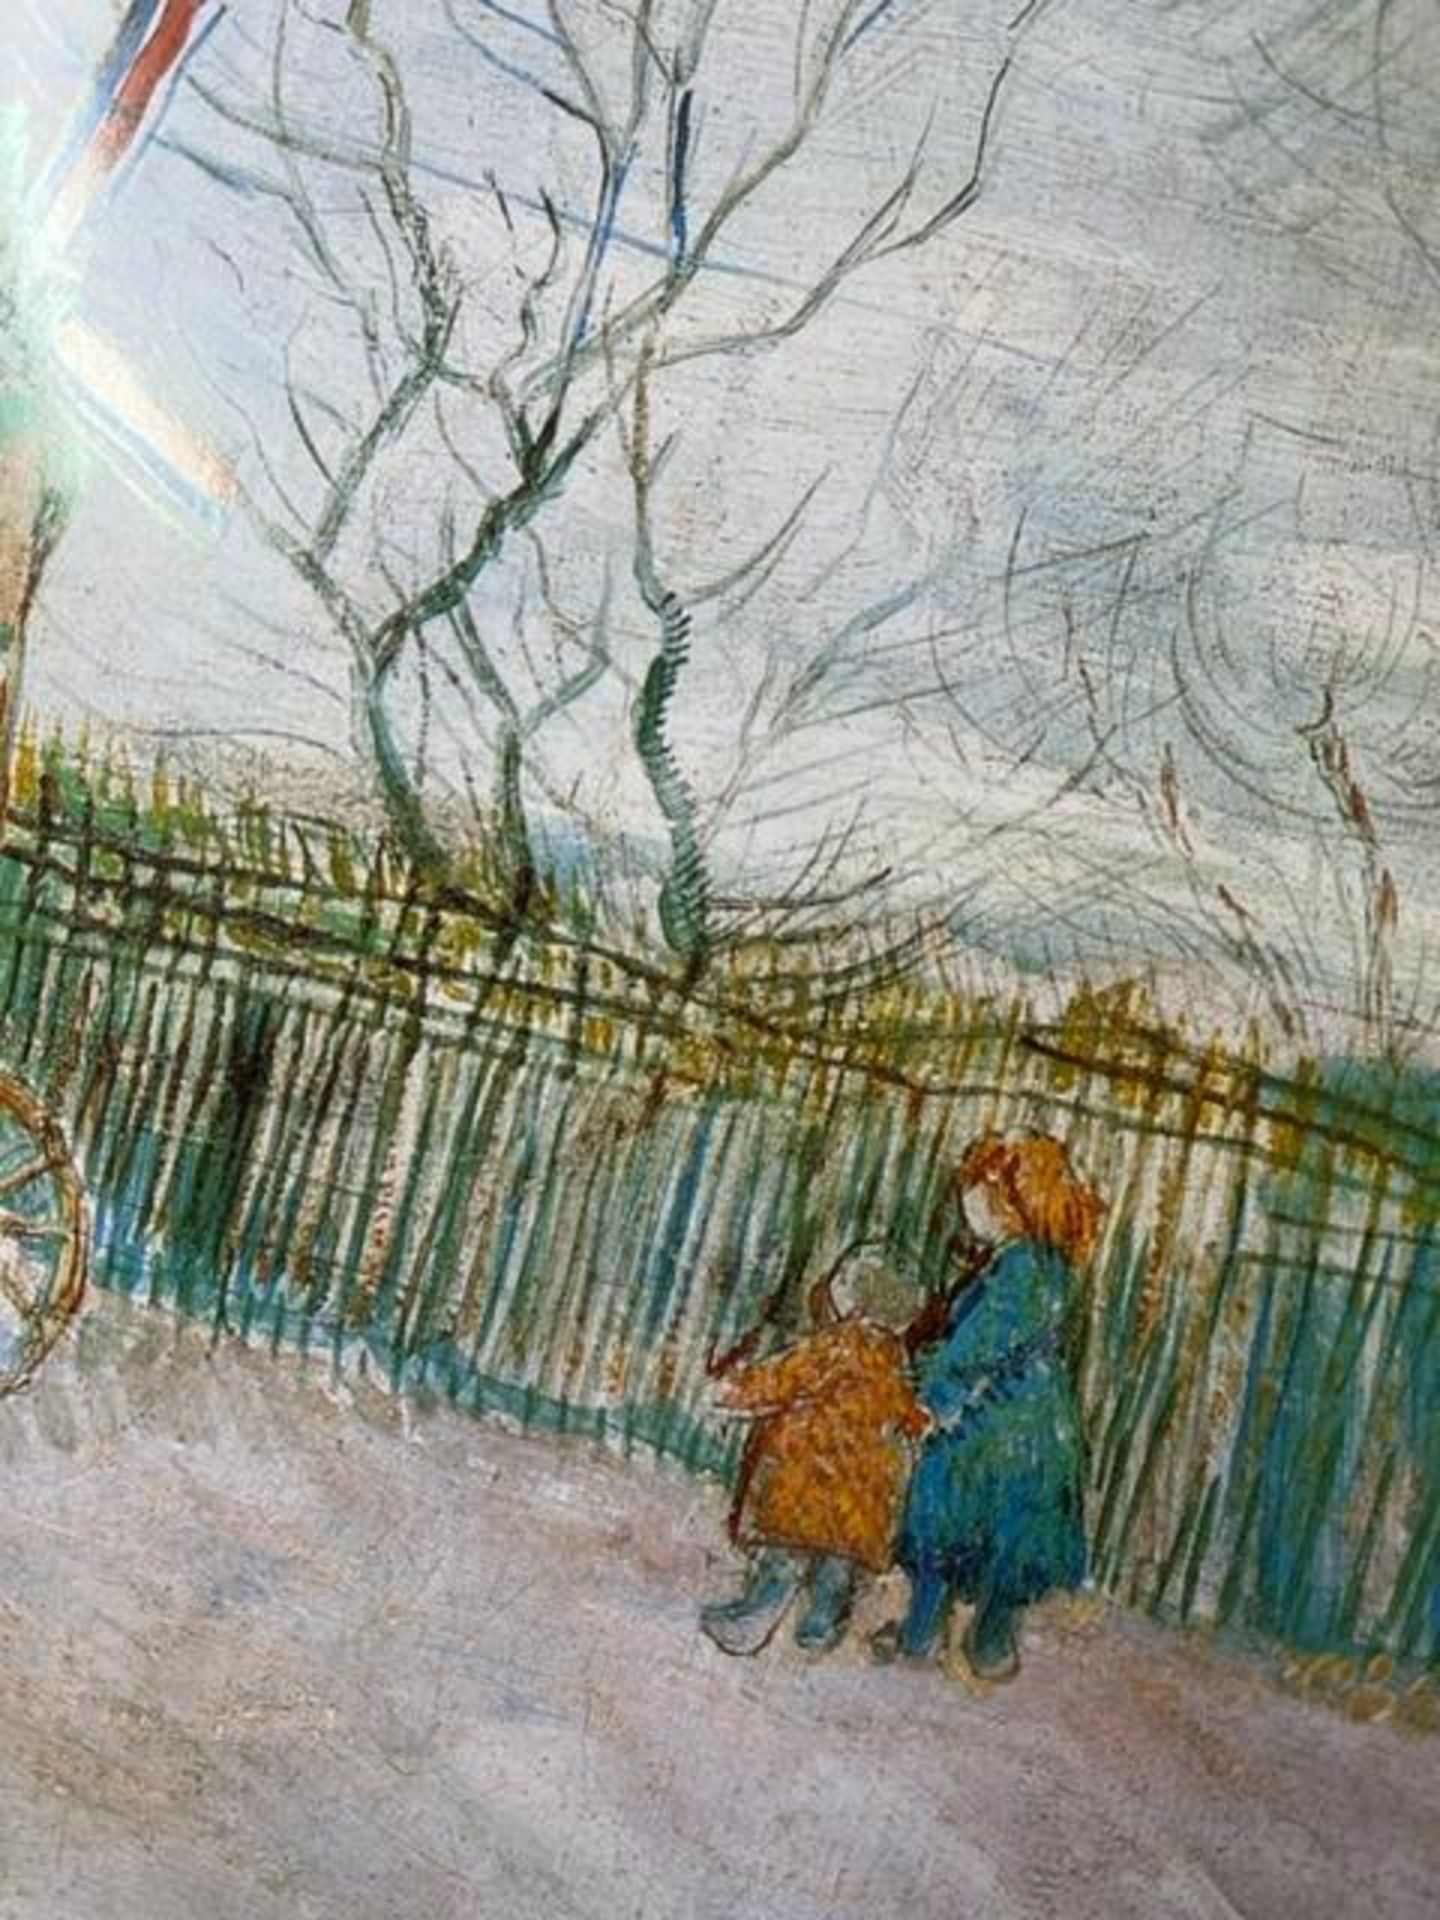 Vincent van Gogh "Street Scene" Print. - Image 6 of 6